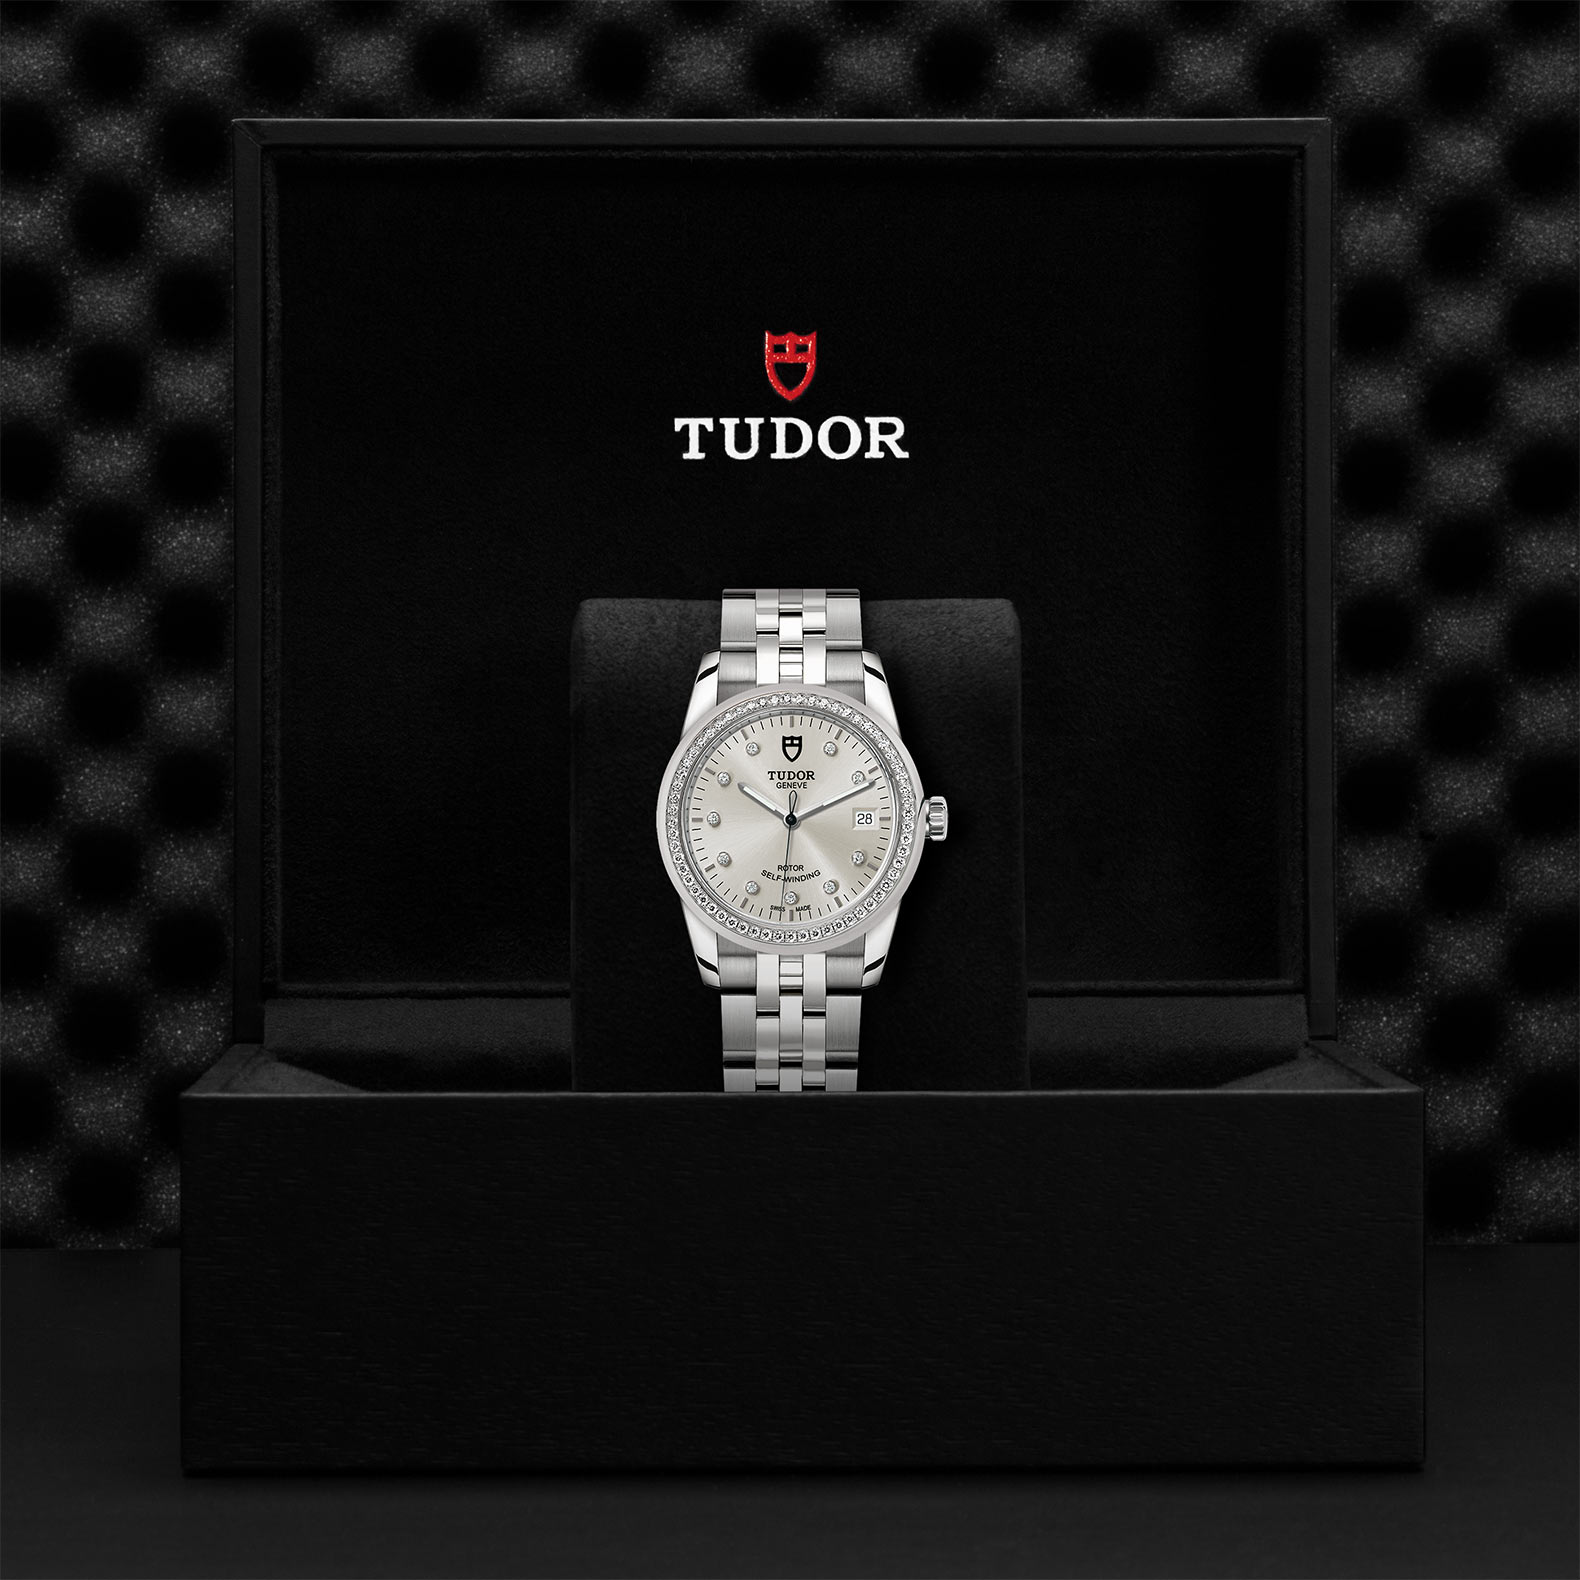 Tudor Glamour Date M55020-0003